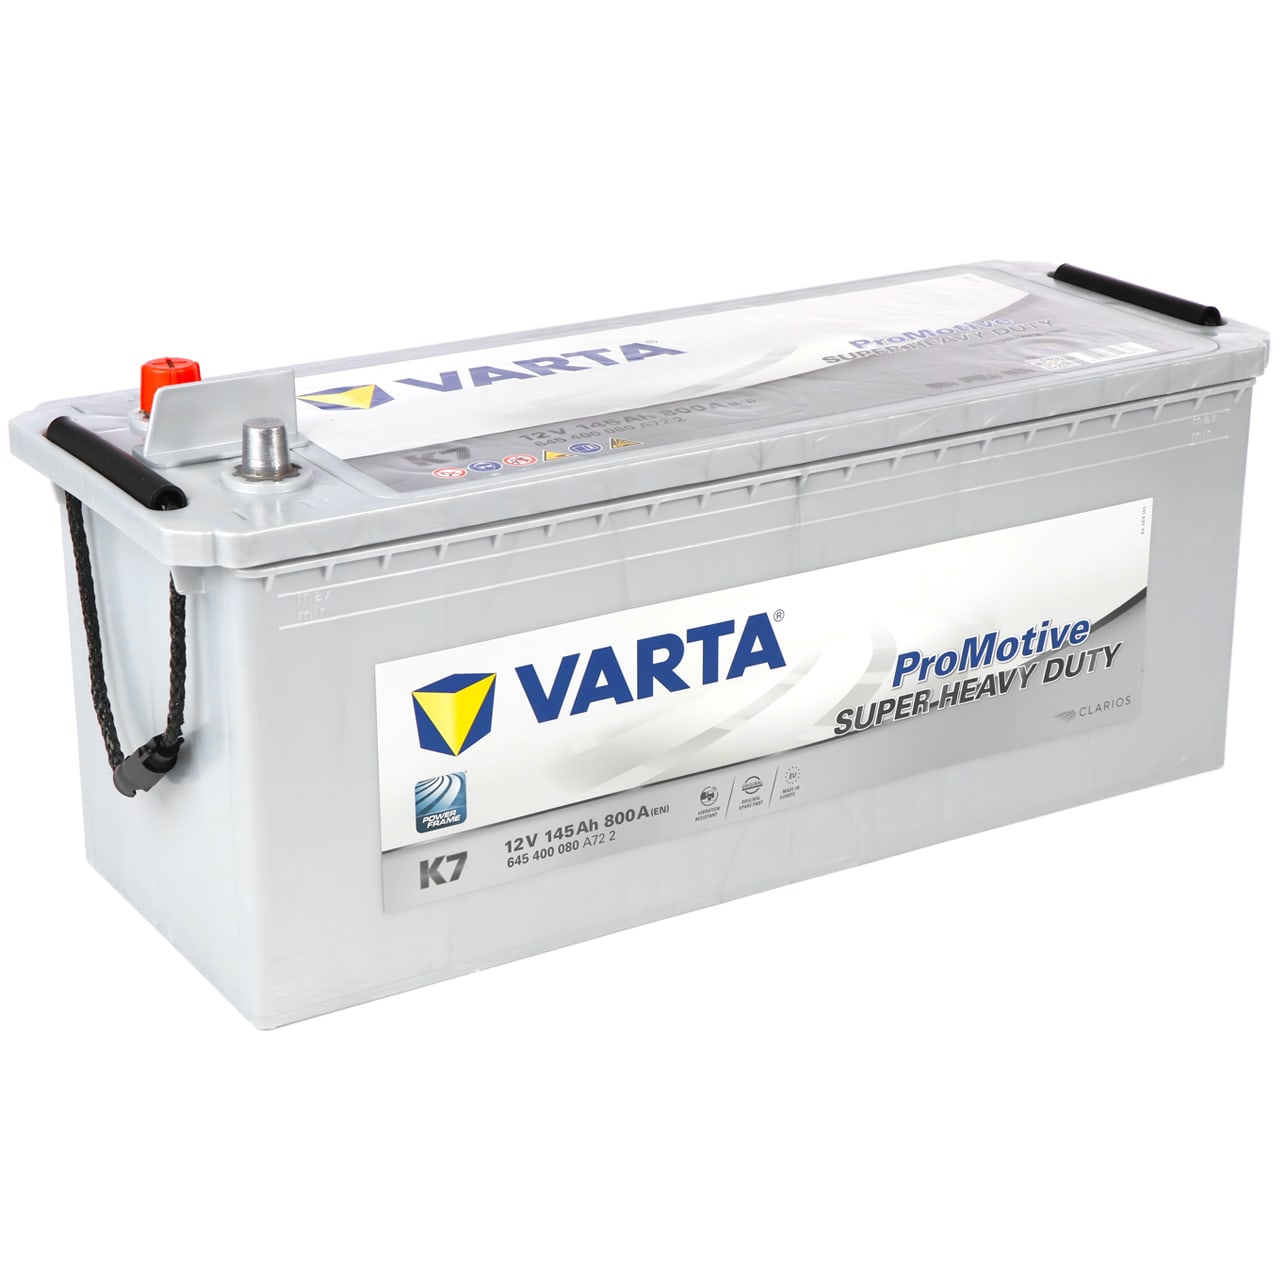 Varta K7 Promotive Silver 12V 145Ah 800A/EN